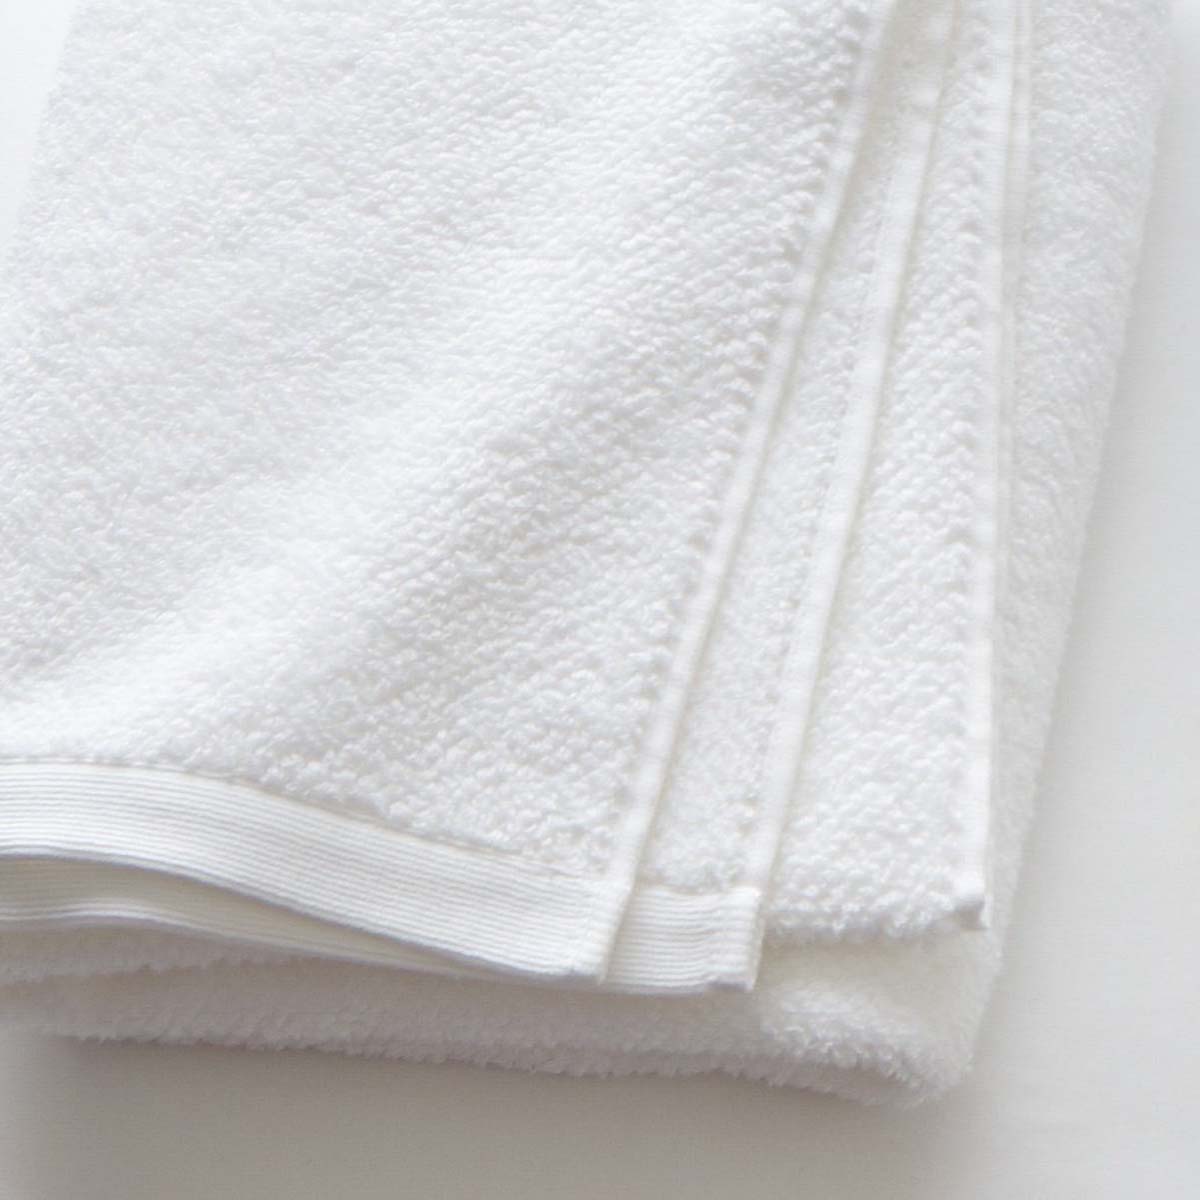 Peacock Alley Chelsea Bath Towel - White